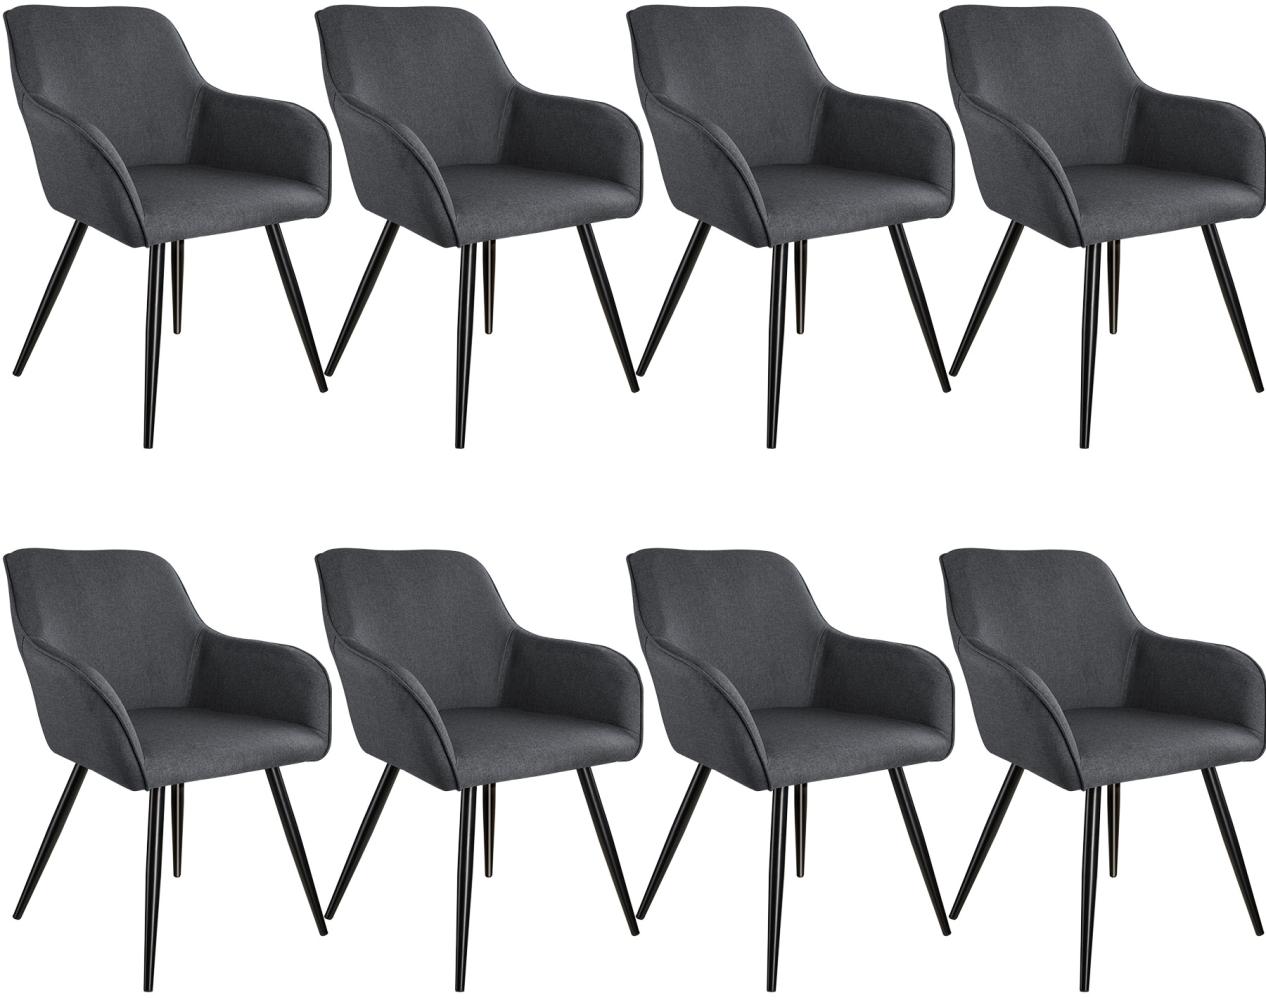 8er Set Stuhl Marilyn Leinenoptik, schwarze Stuhlbeine - dunkelgrau/schwarz Bild 1